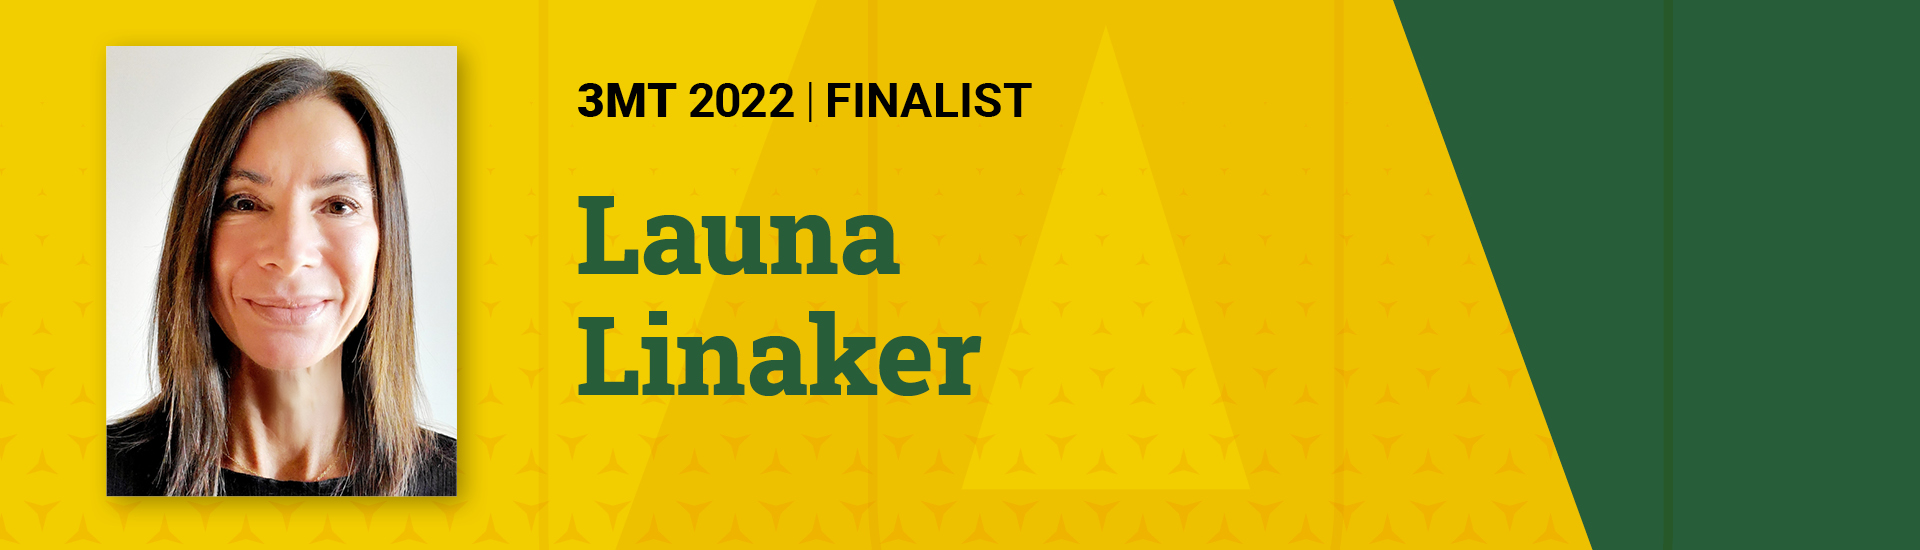 3MT 2022 Finalist Launa Linaker